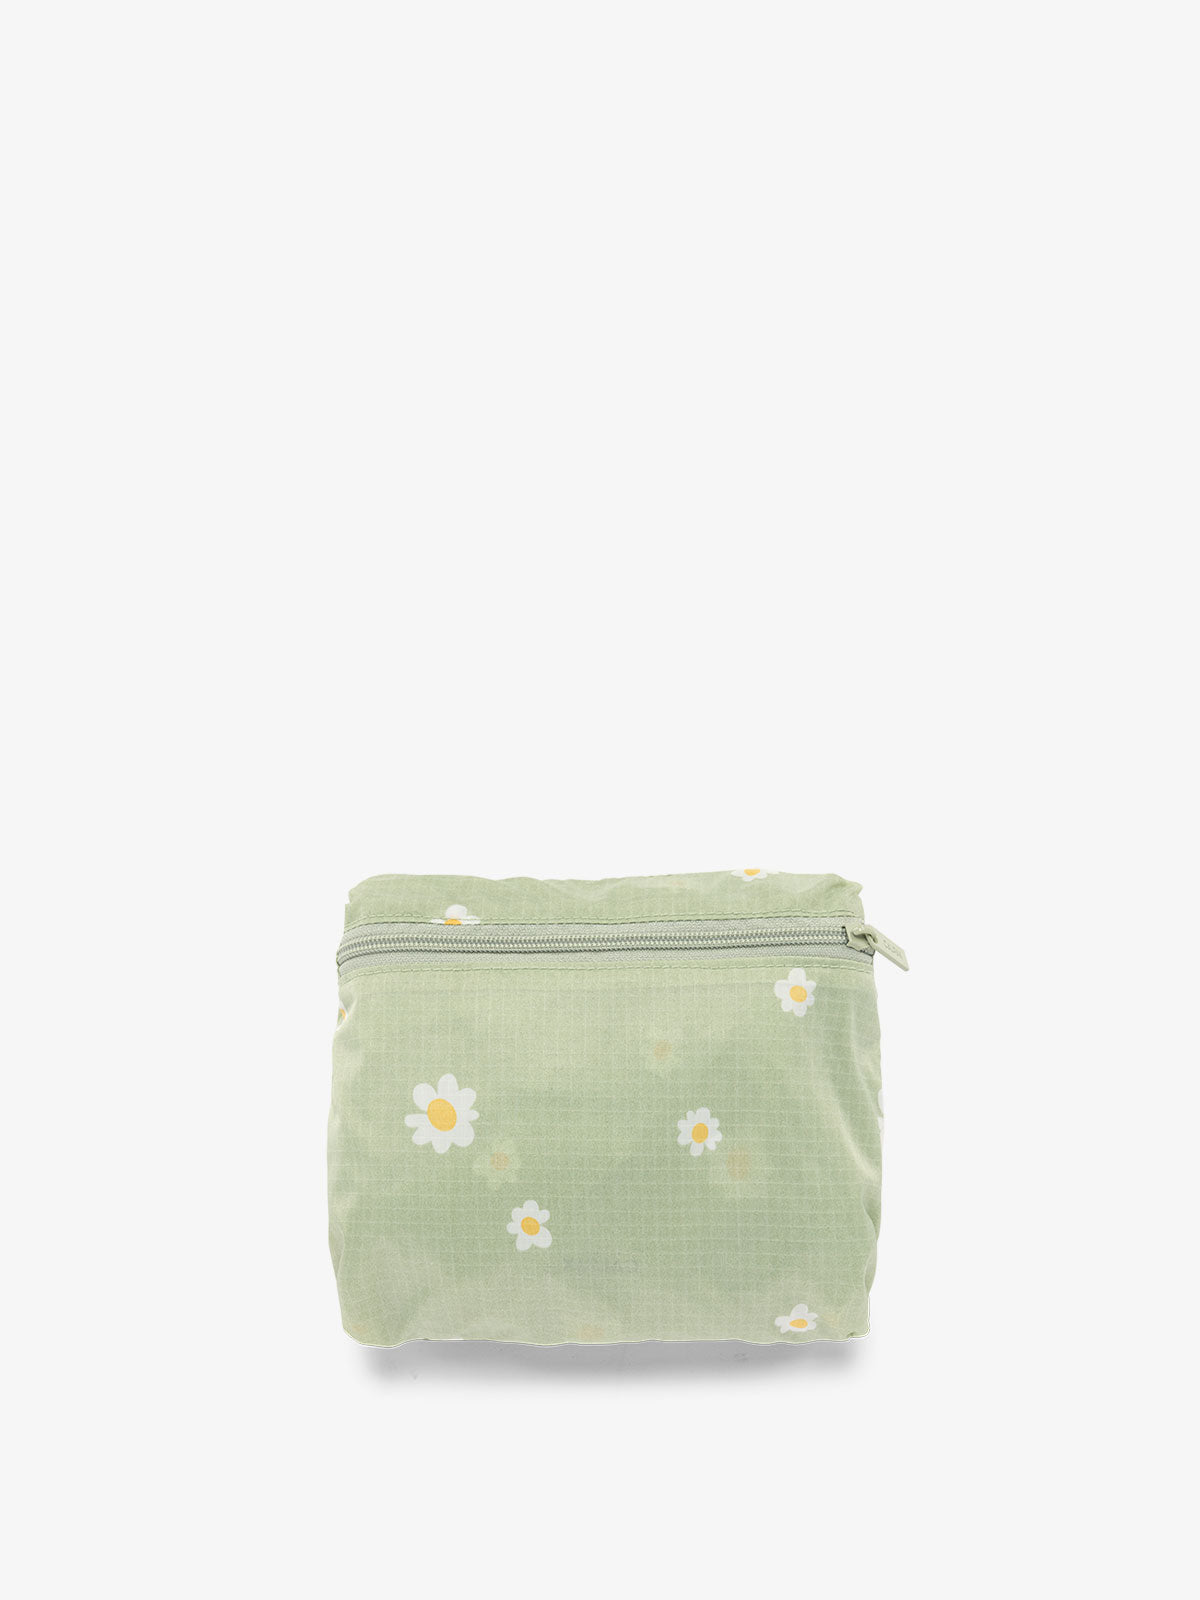 CALPAK Compakt foldable duffle bag for travel in light green floral print